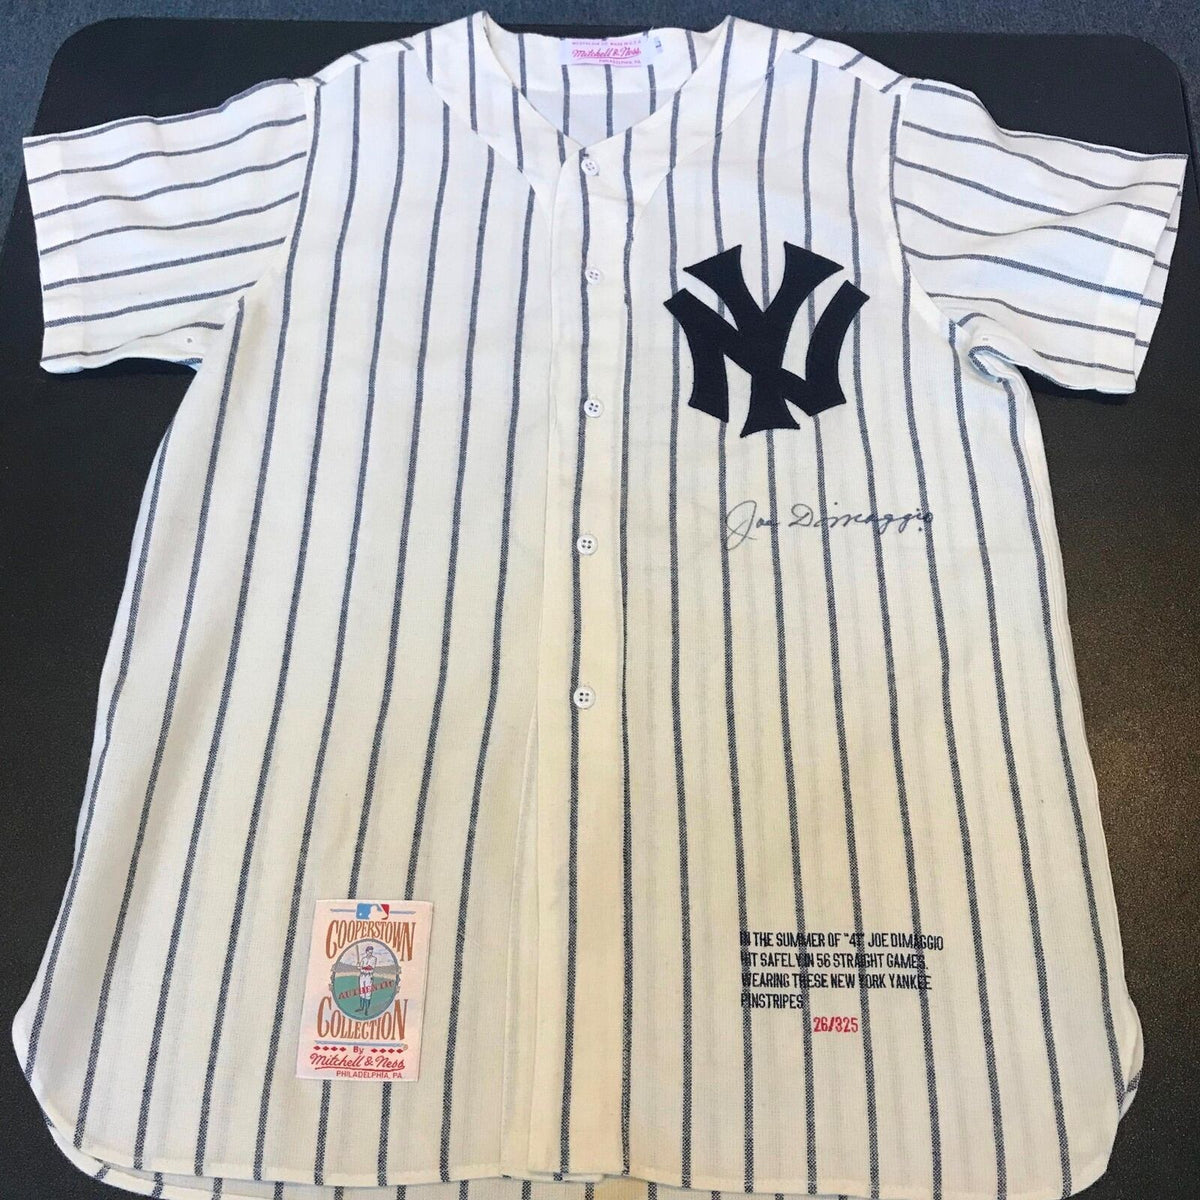 Beautiful Joe Dimaggio Signed 1941 New York Yankees Jersey PSA DNA